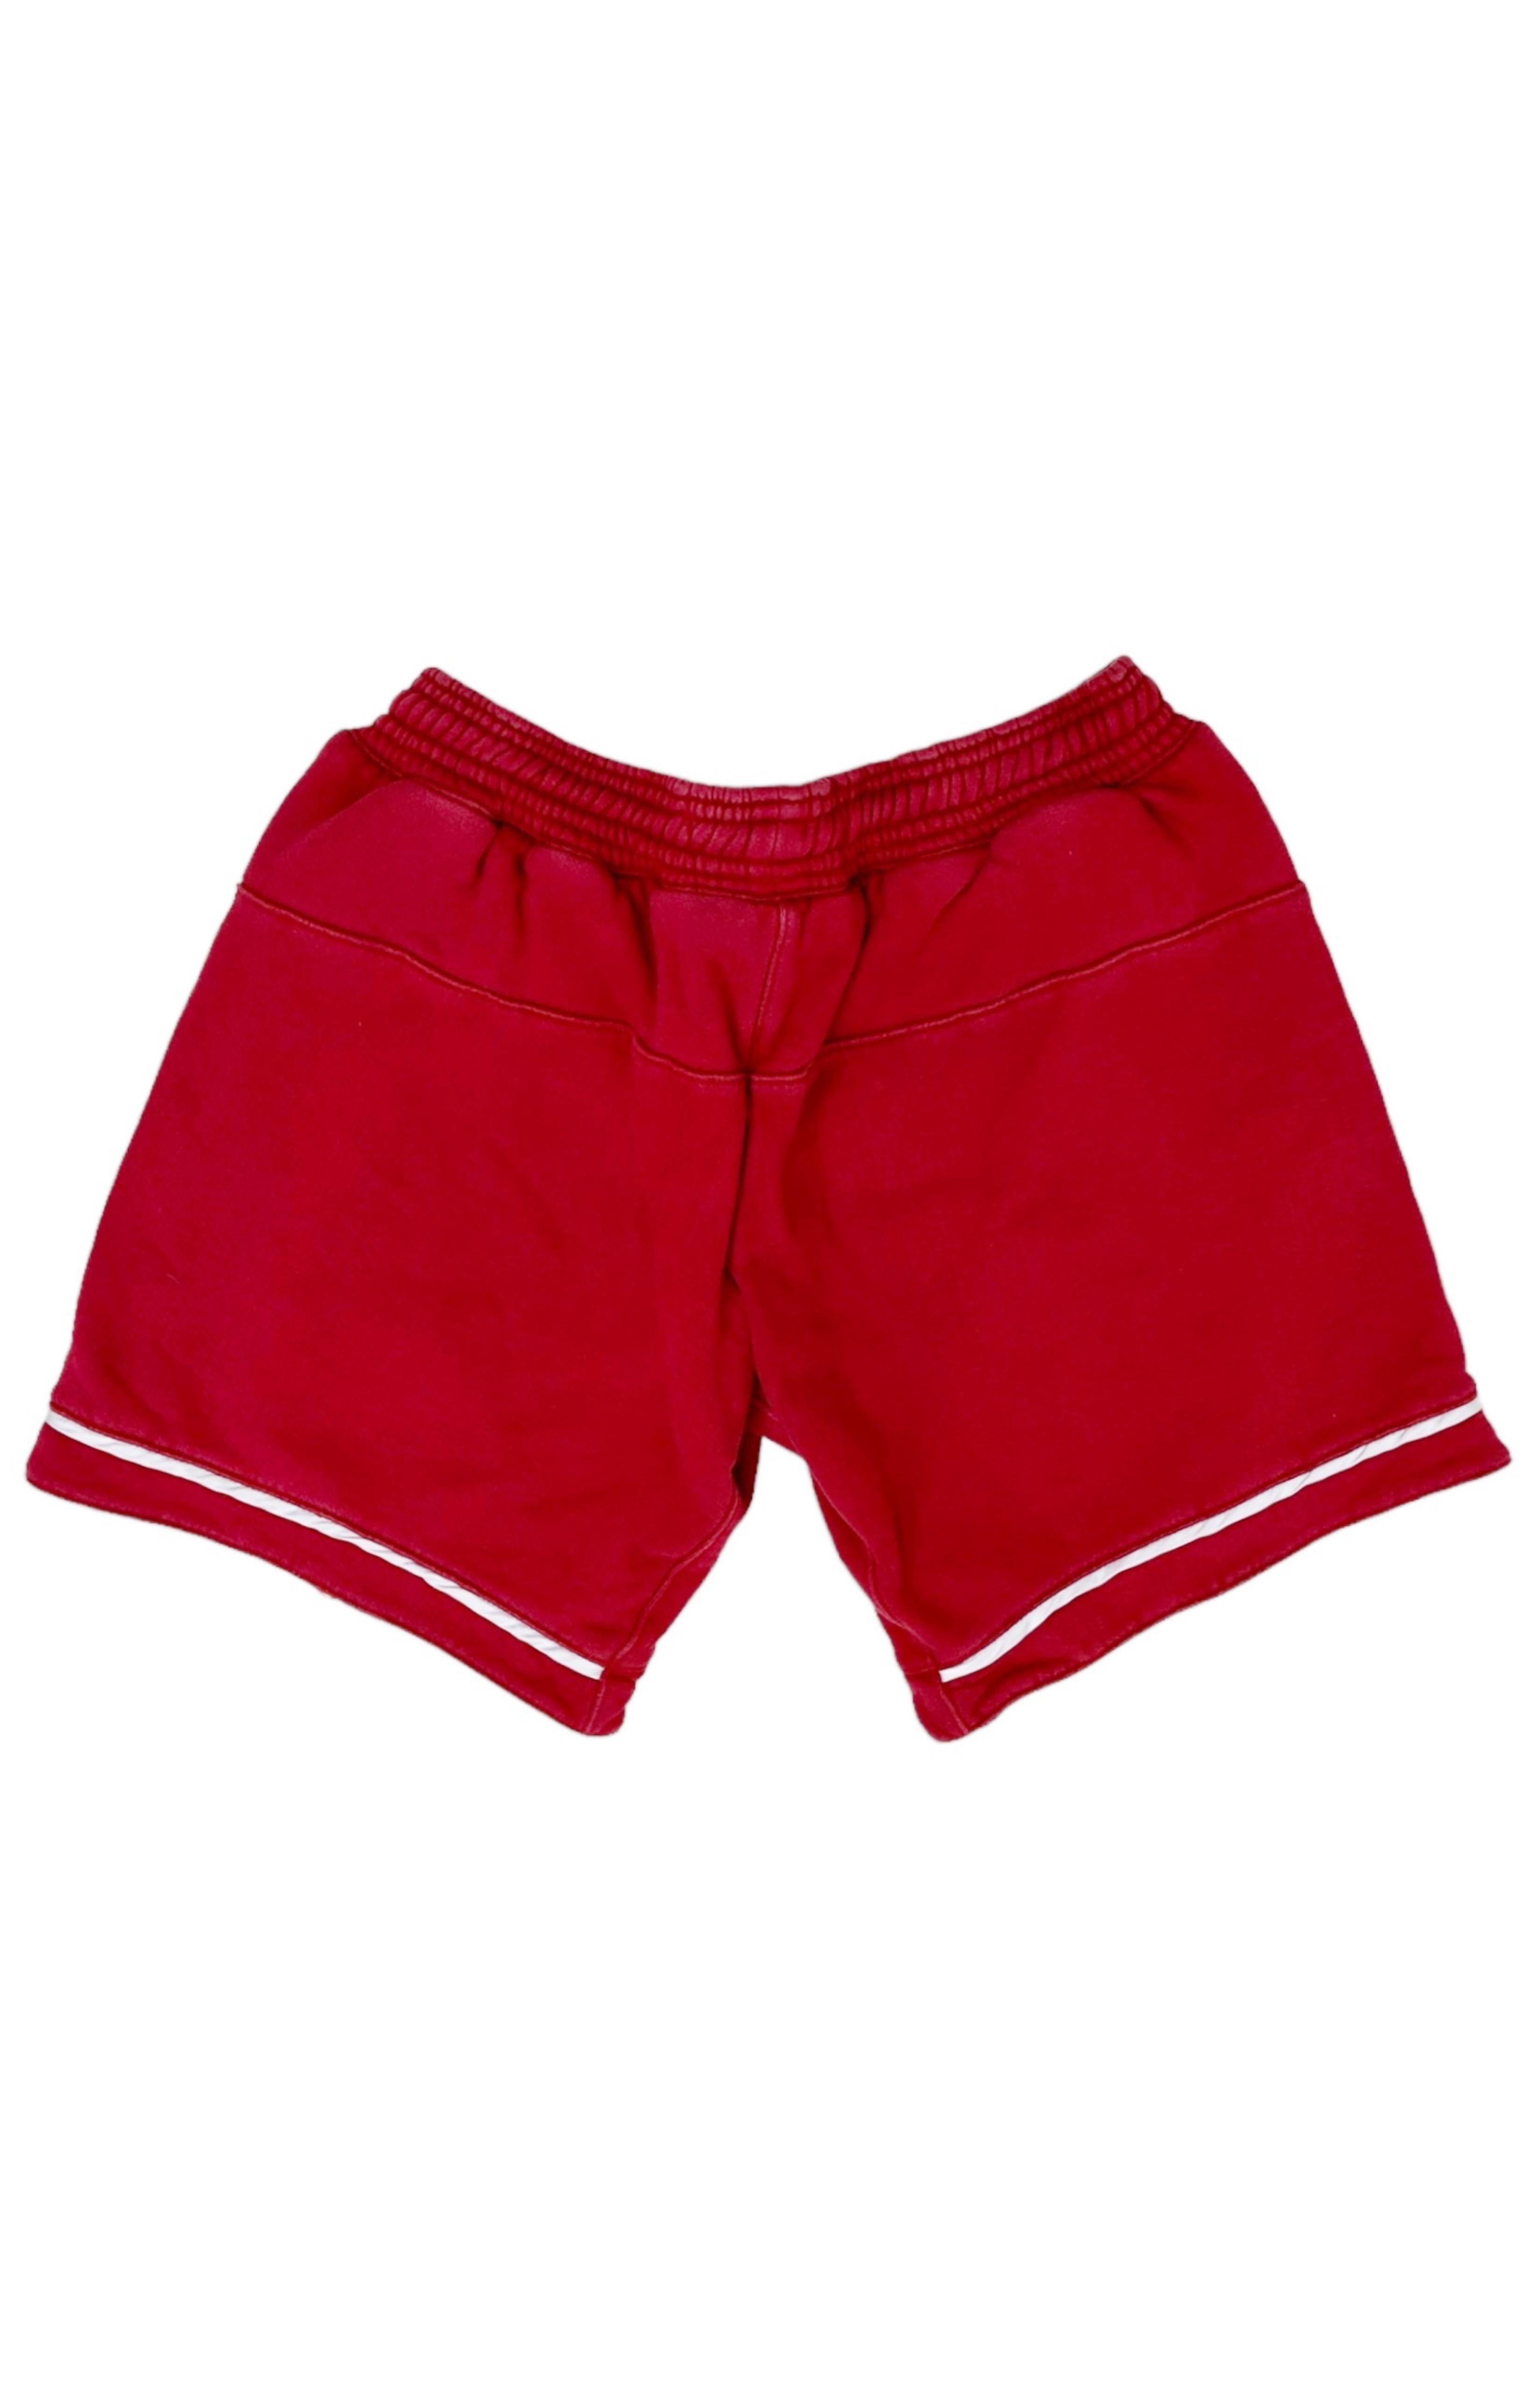 TUFF CROWD  Shorts Size: Men's S